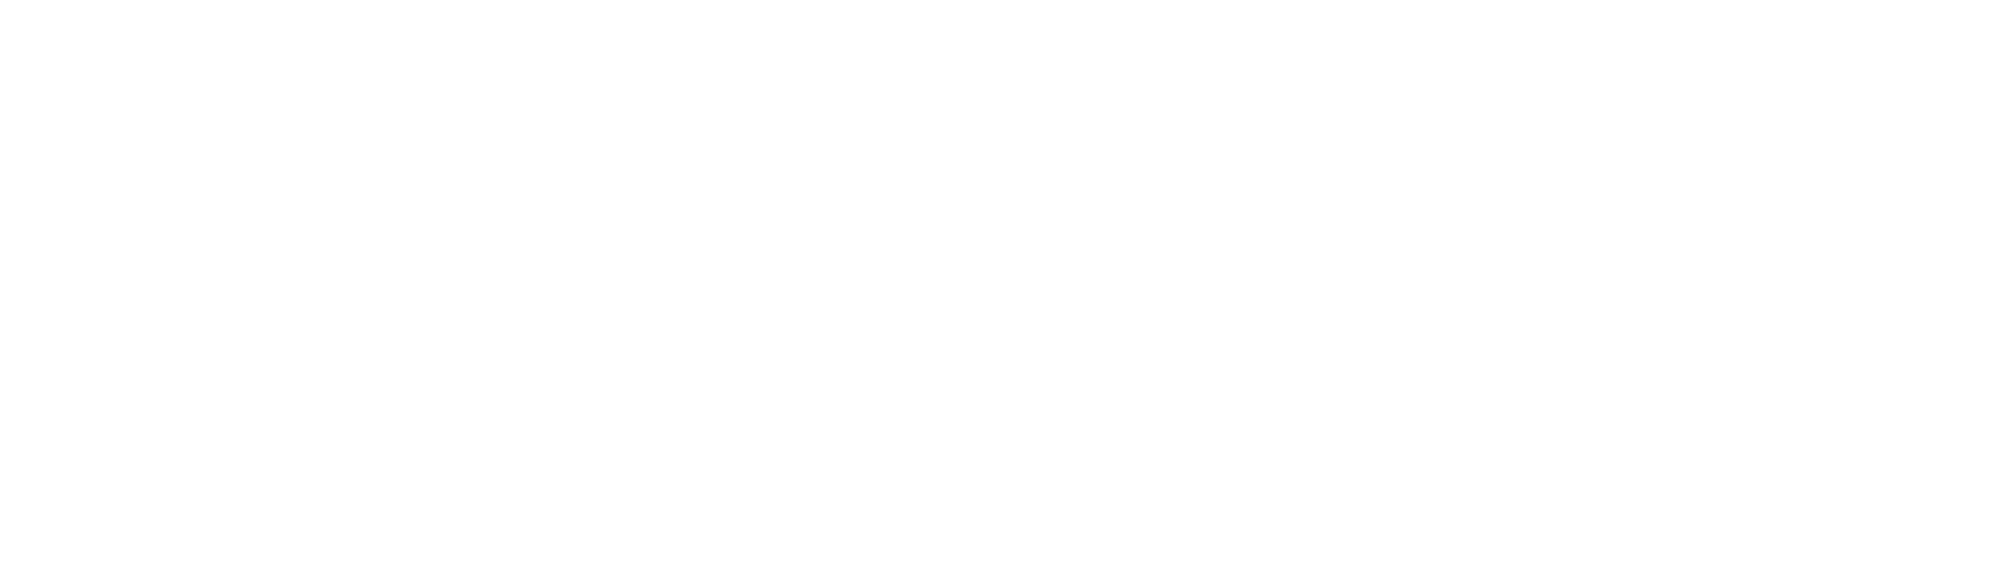 The Small Ship Collective